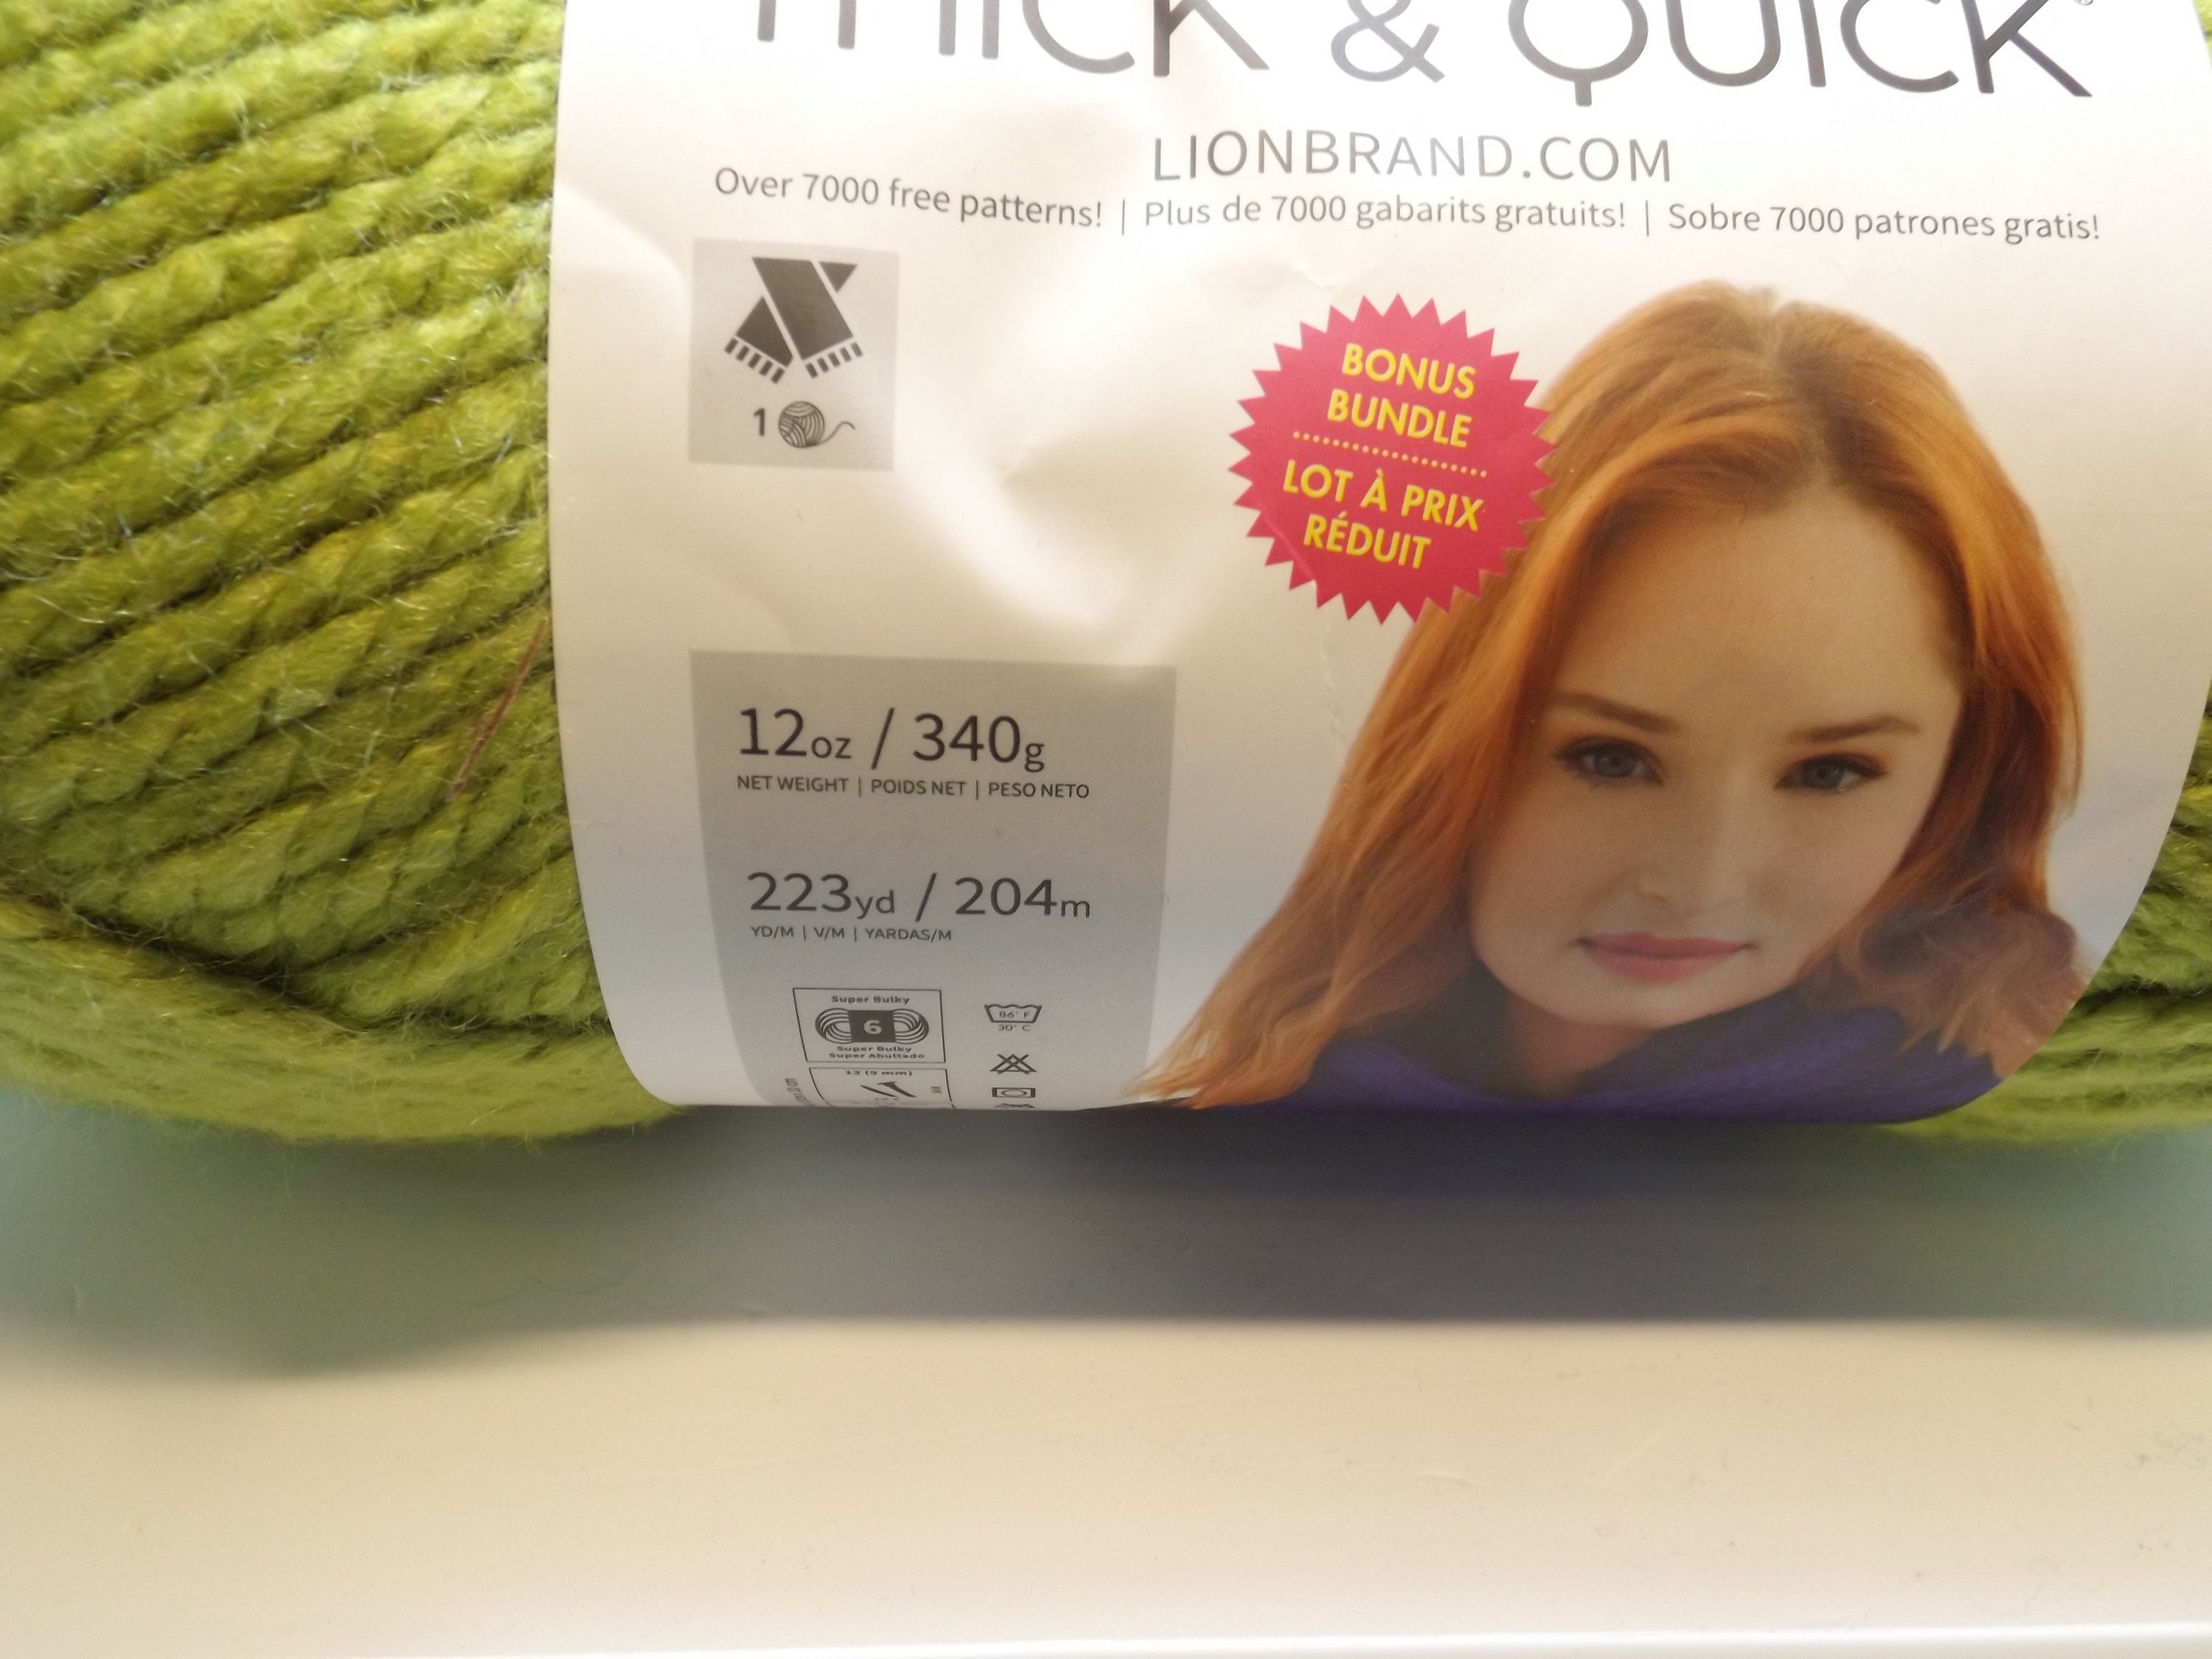 Lion Brand Thick & Quick Bonus Bundle Yarn - Leaf